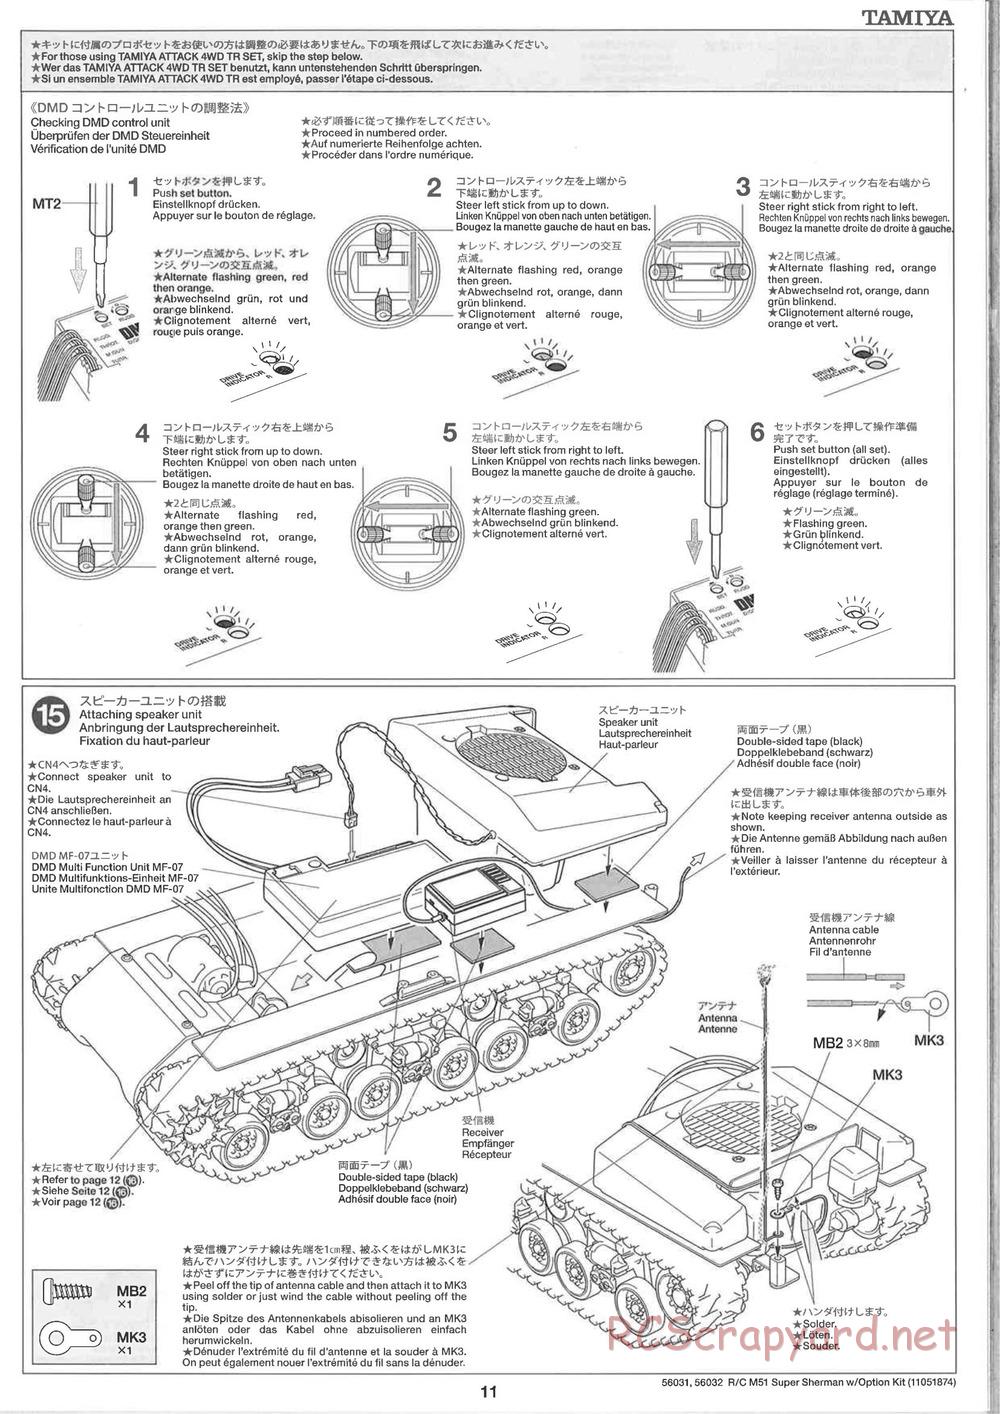 Tamiya - Super Sherman M-51 - 1/16 Scale Chassis - Manual - Page 11